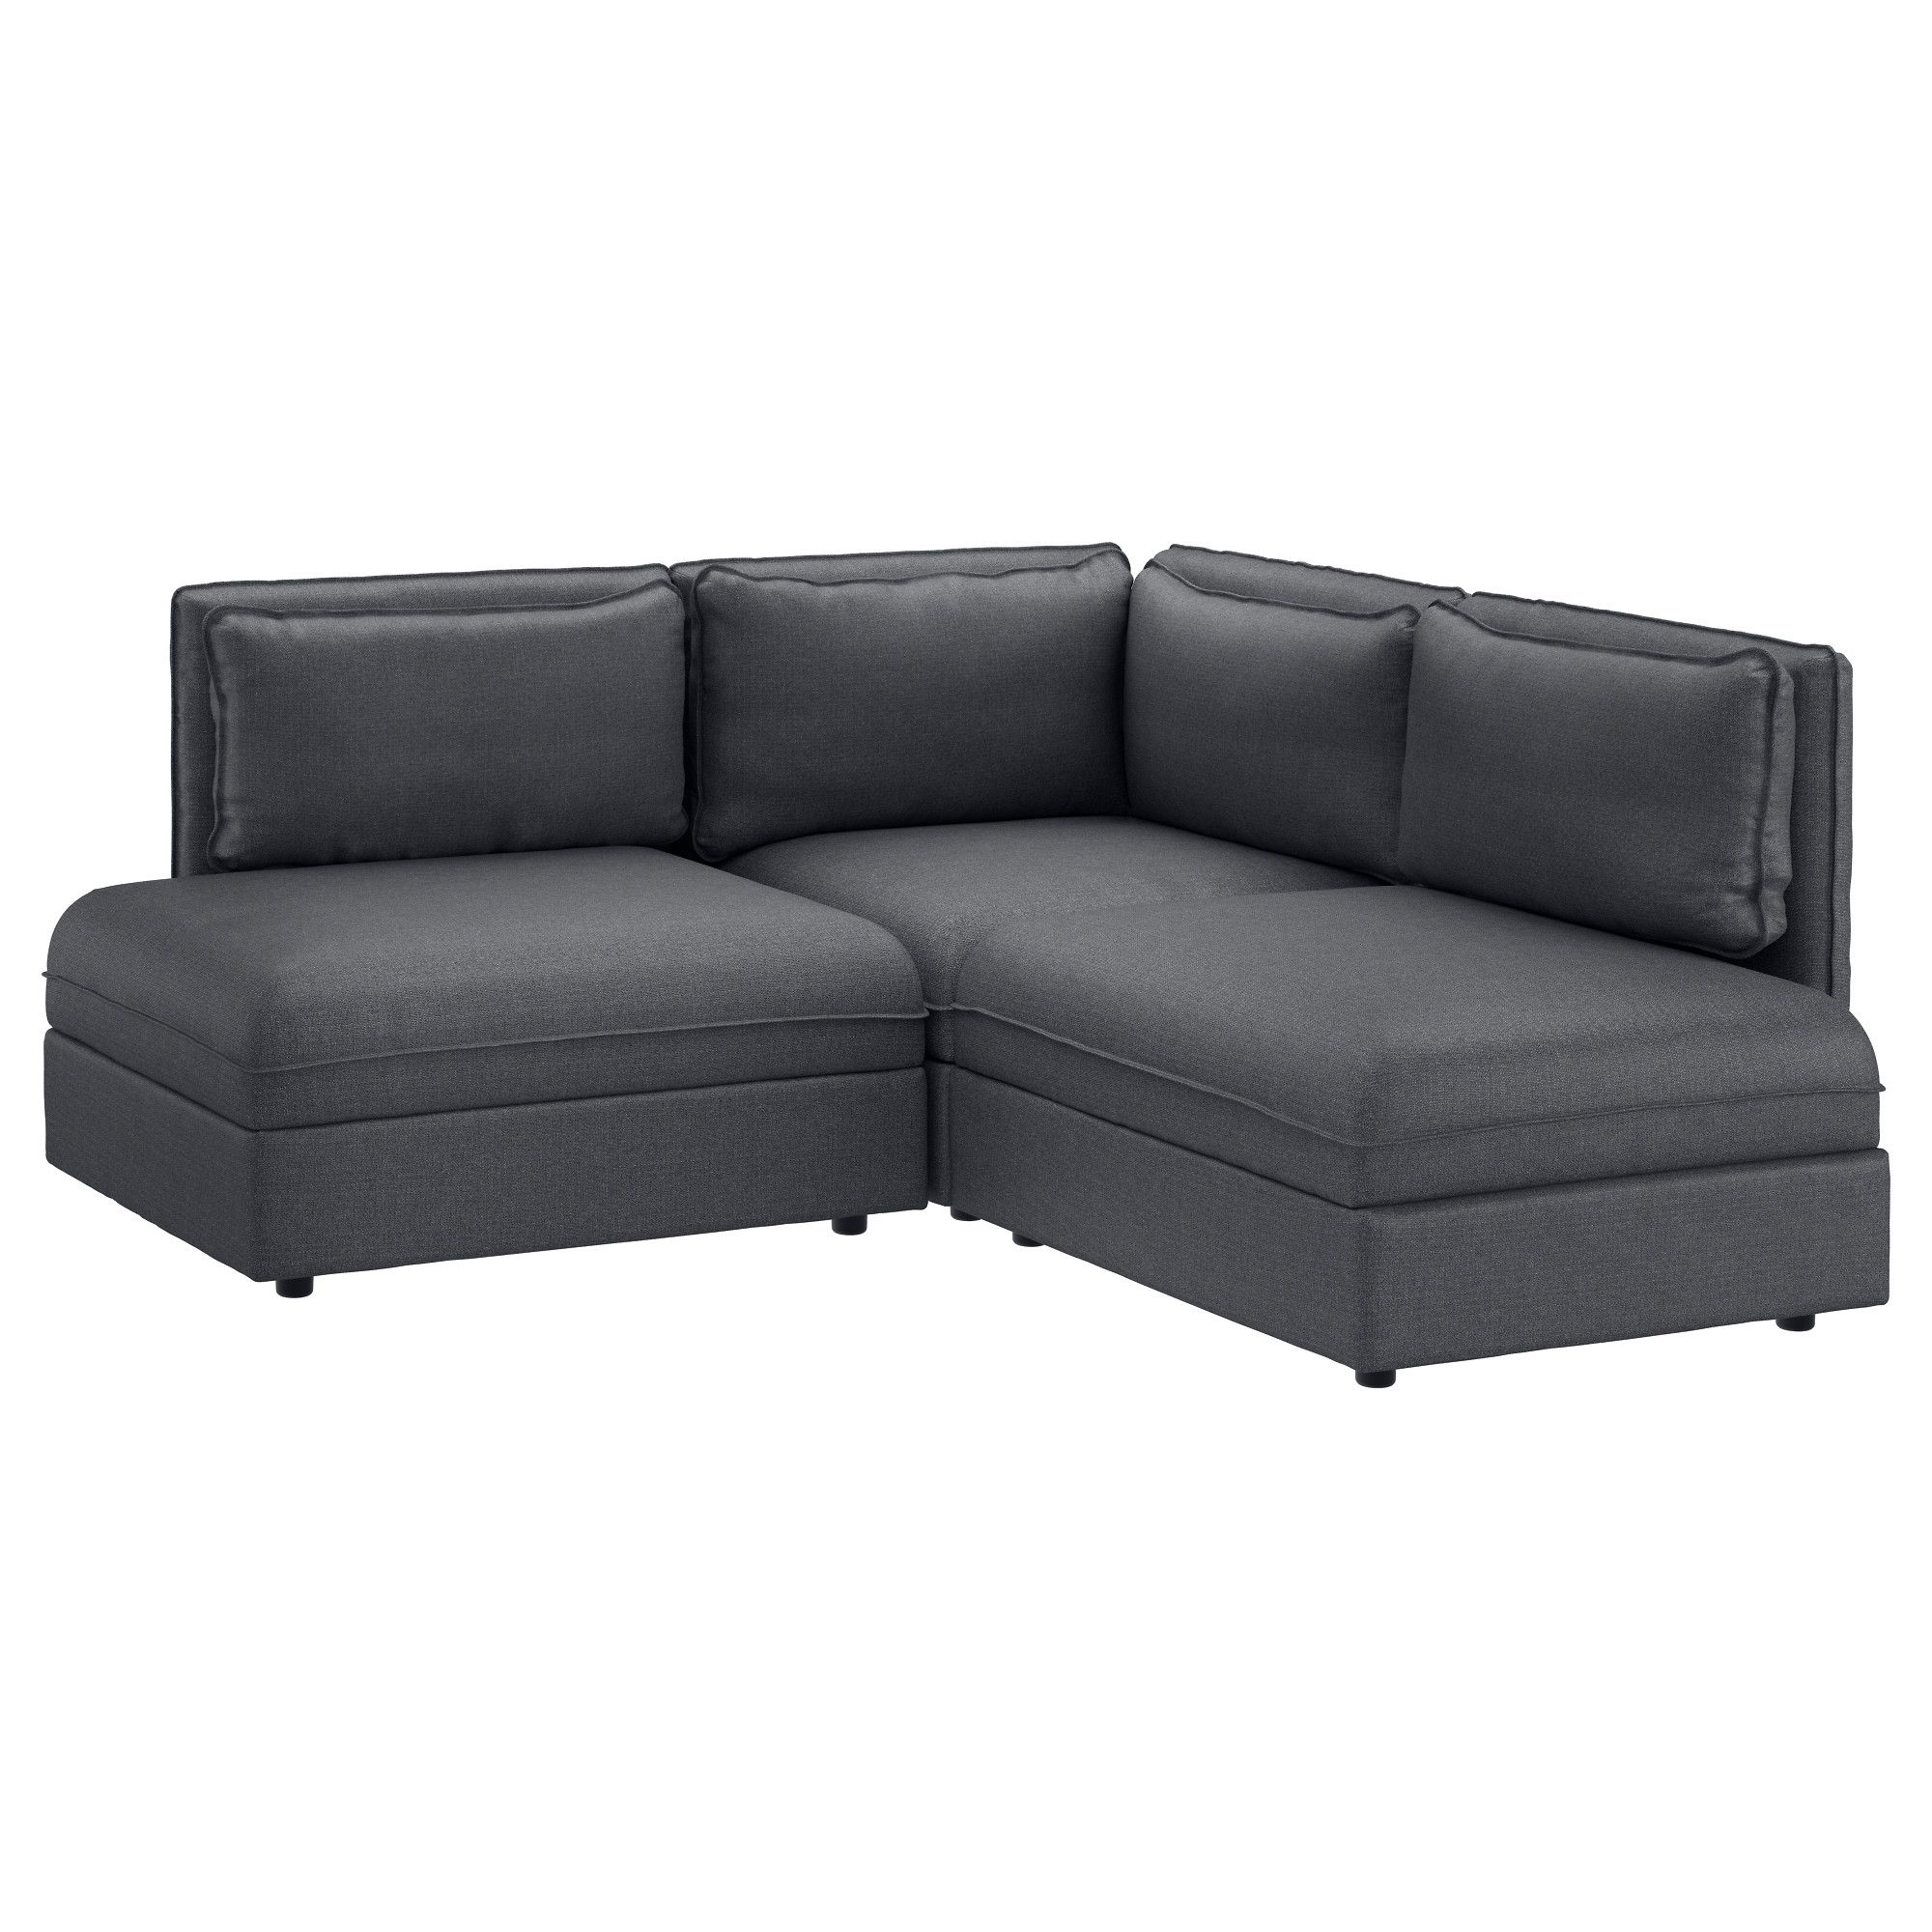 Preferred Vallentuna 3 Seat Corner Sofa Hillared Dark Grey – Ikea Within Ikea Corner Sofas With Storage (View 14 of 15)